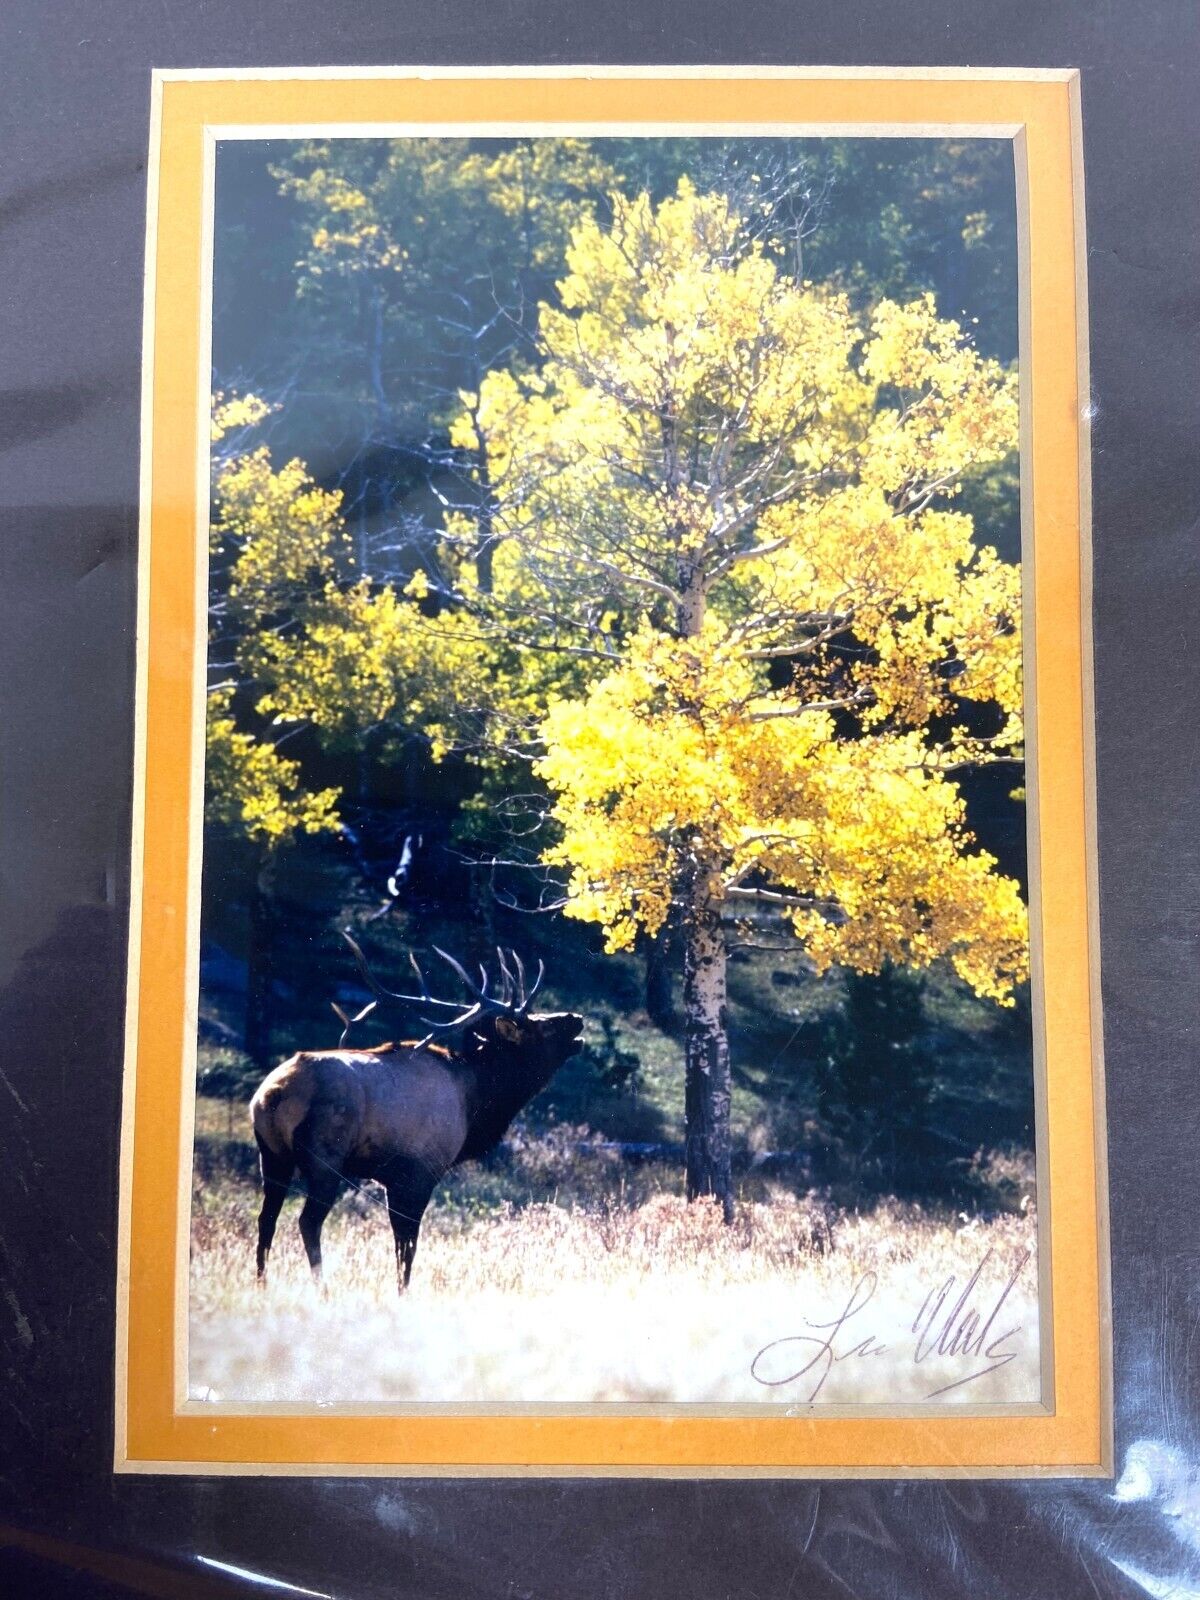 Original Les Voorhis Signed Photograph of Colorado Elk at Echo Lake